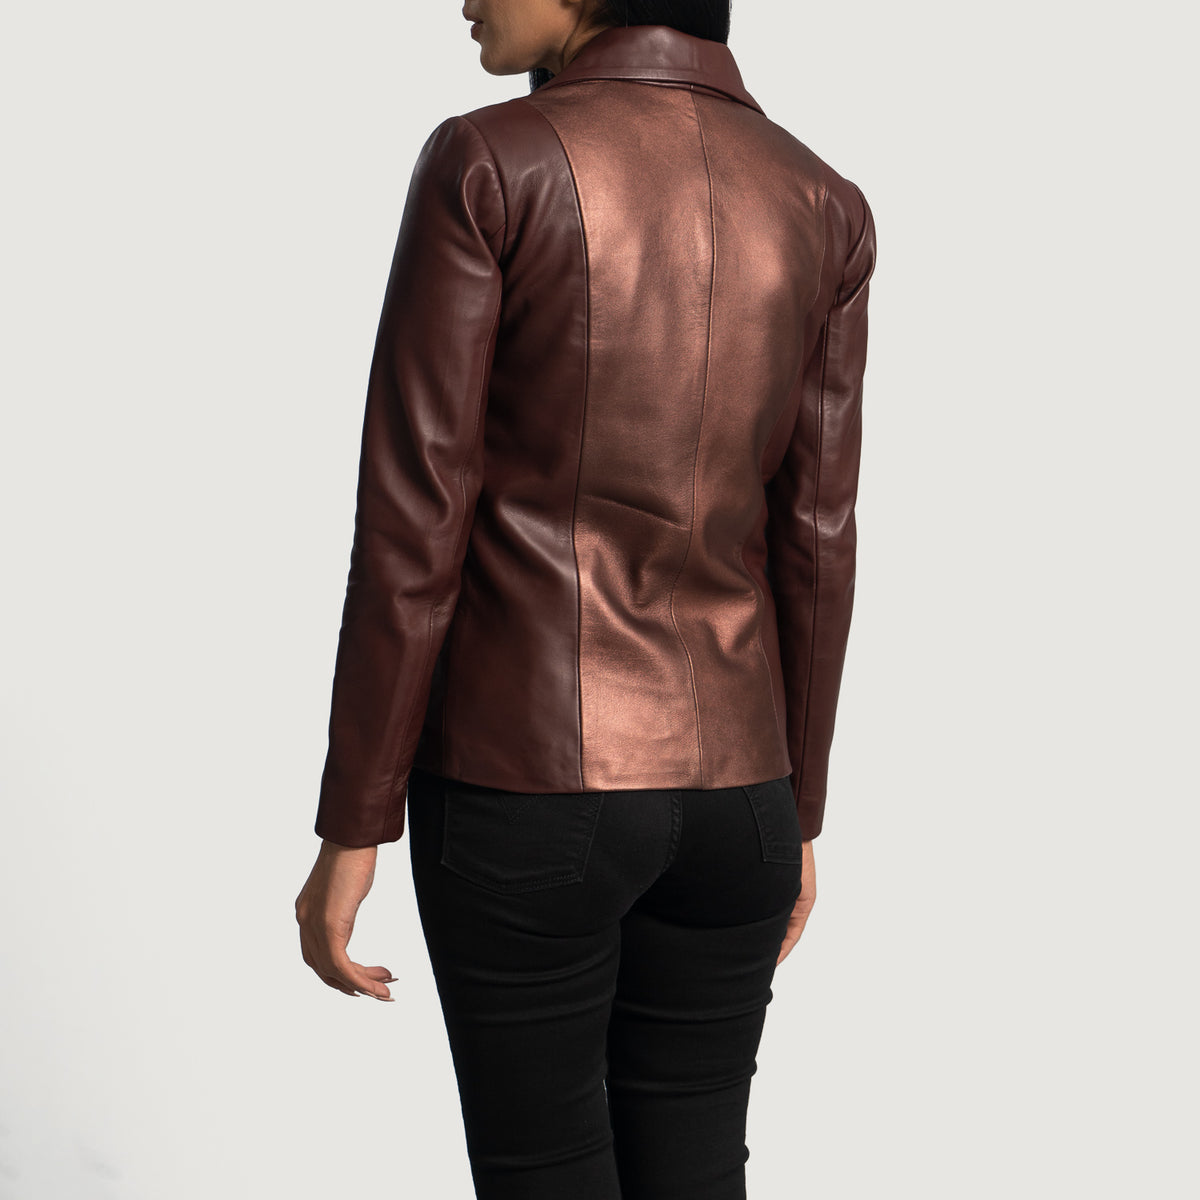 Ace Ruby Metallic Maroon Leather Blazer Plus Size